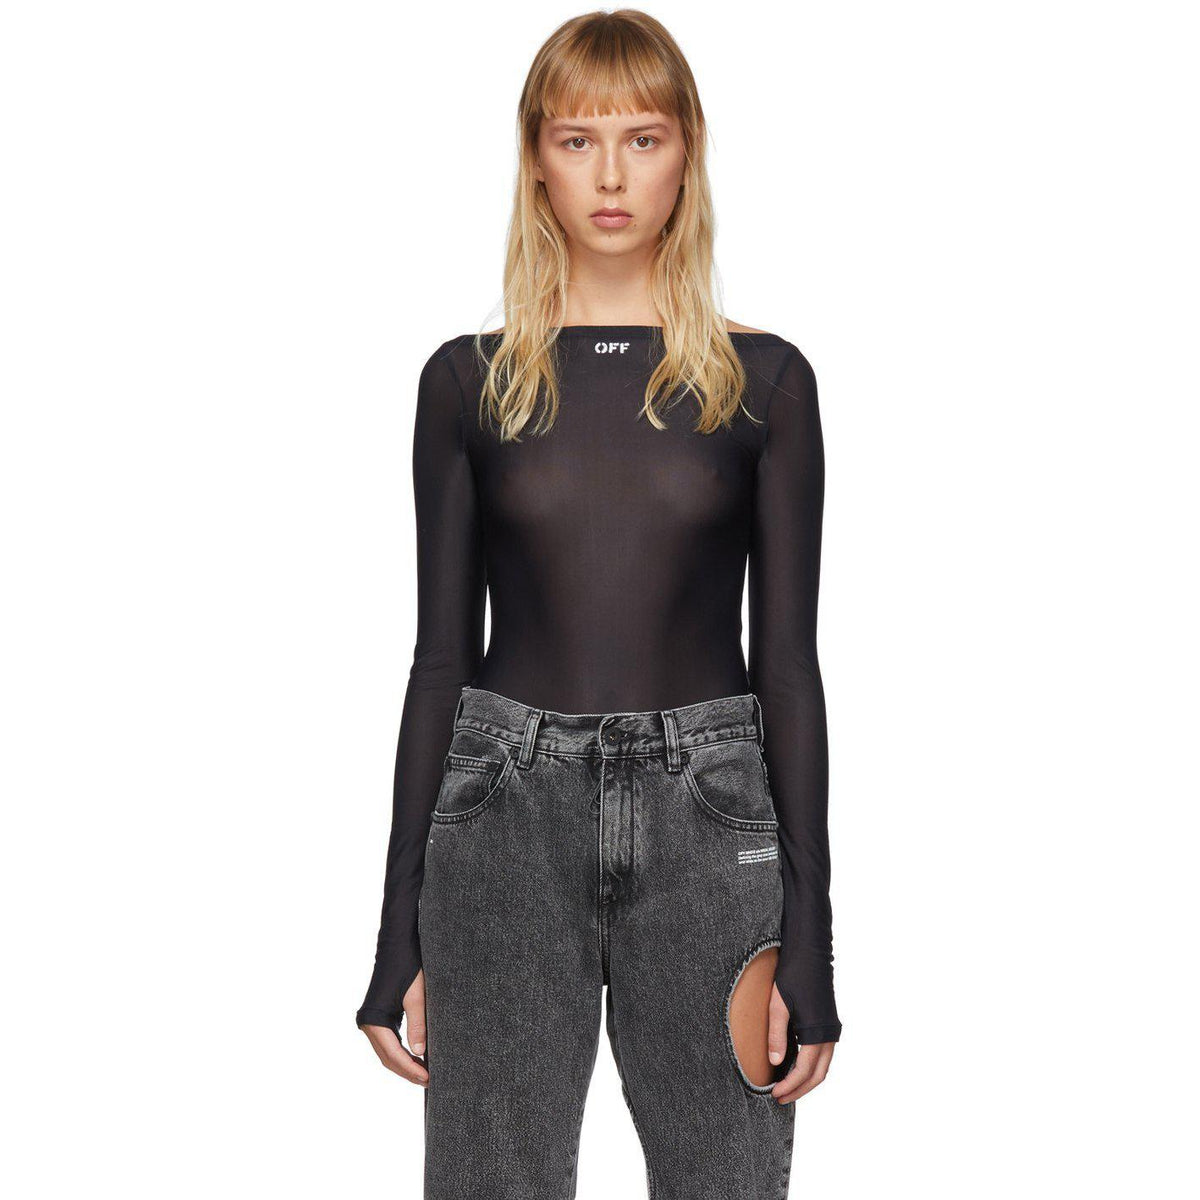 Black Illusion Sheer Bodysuit by Mugler on Sale